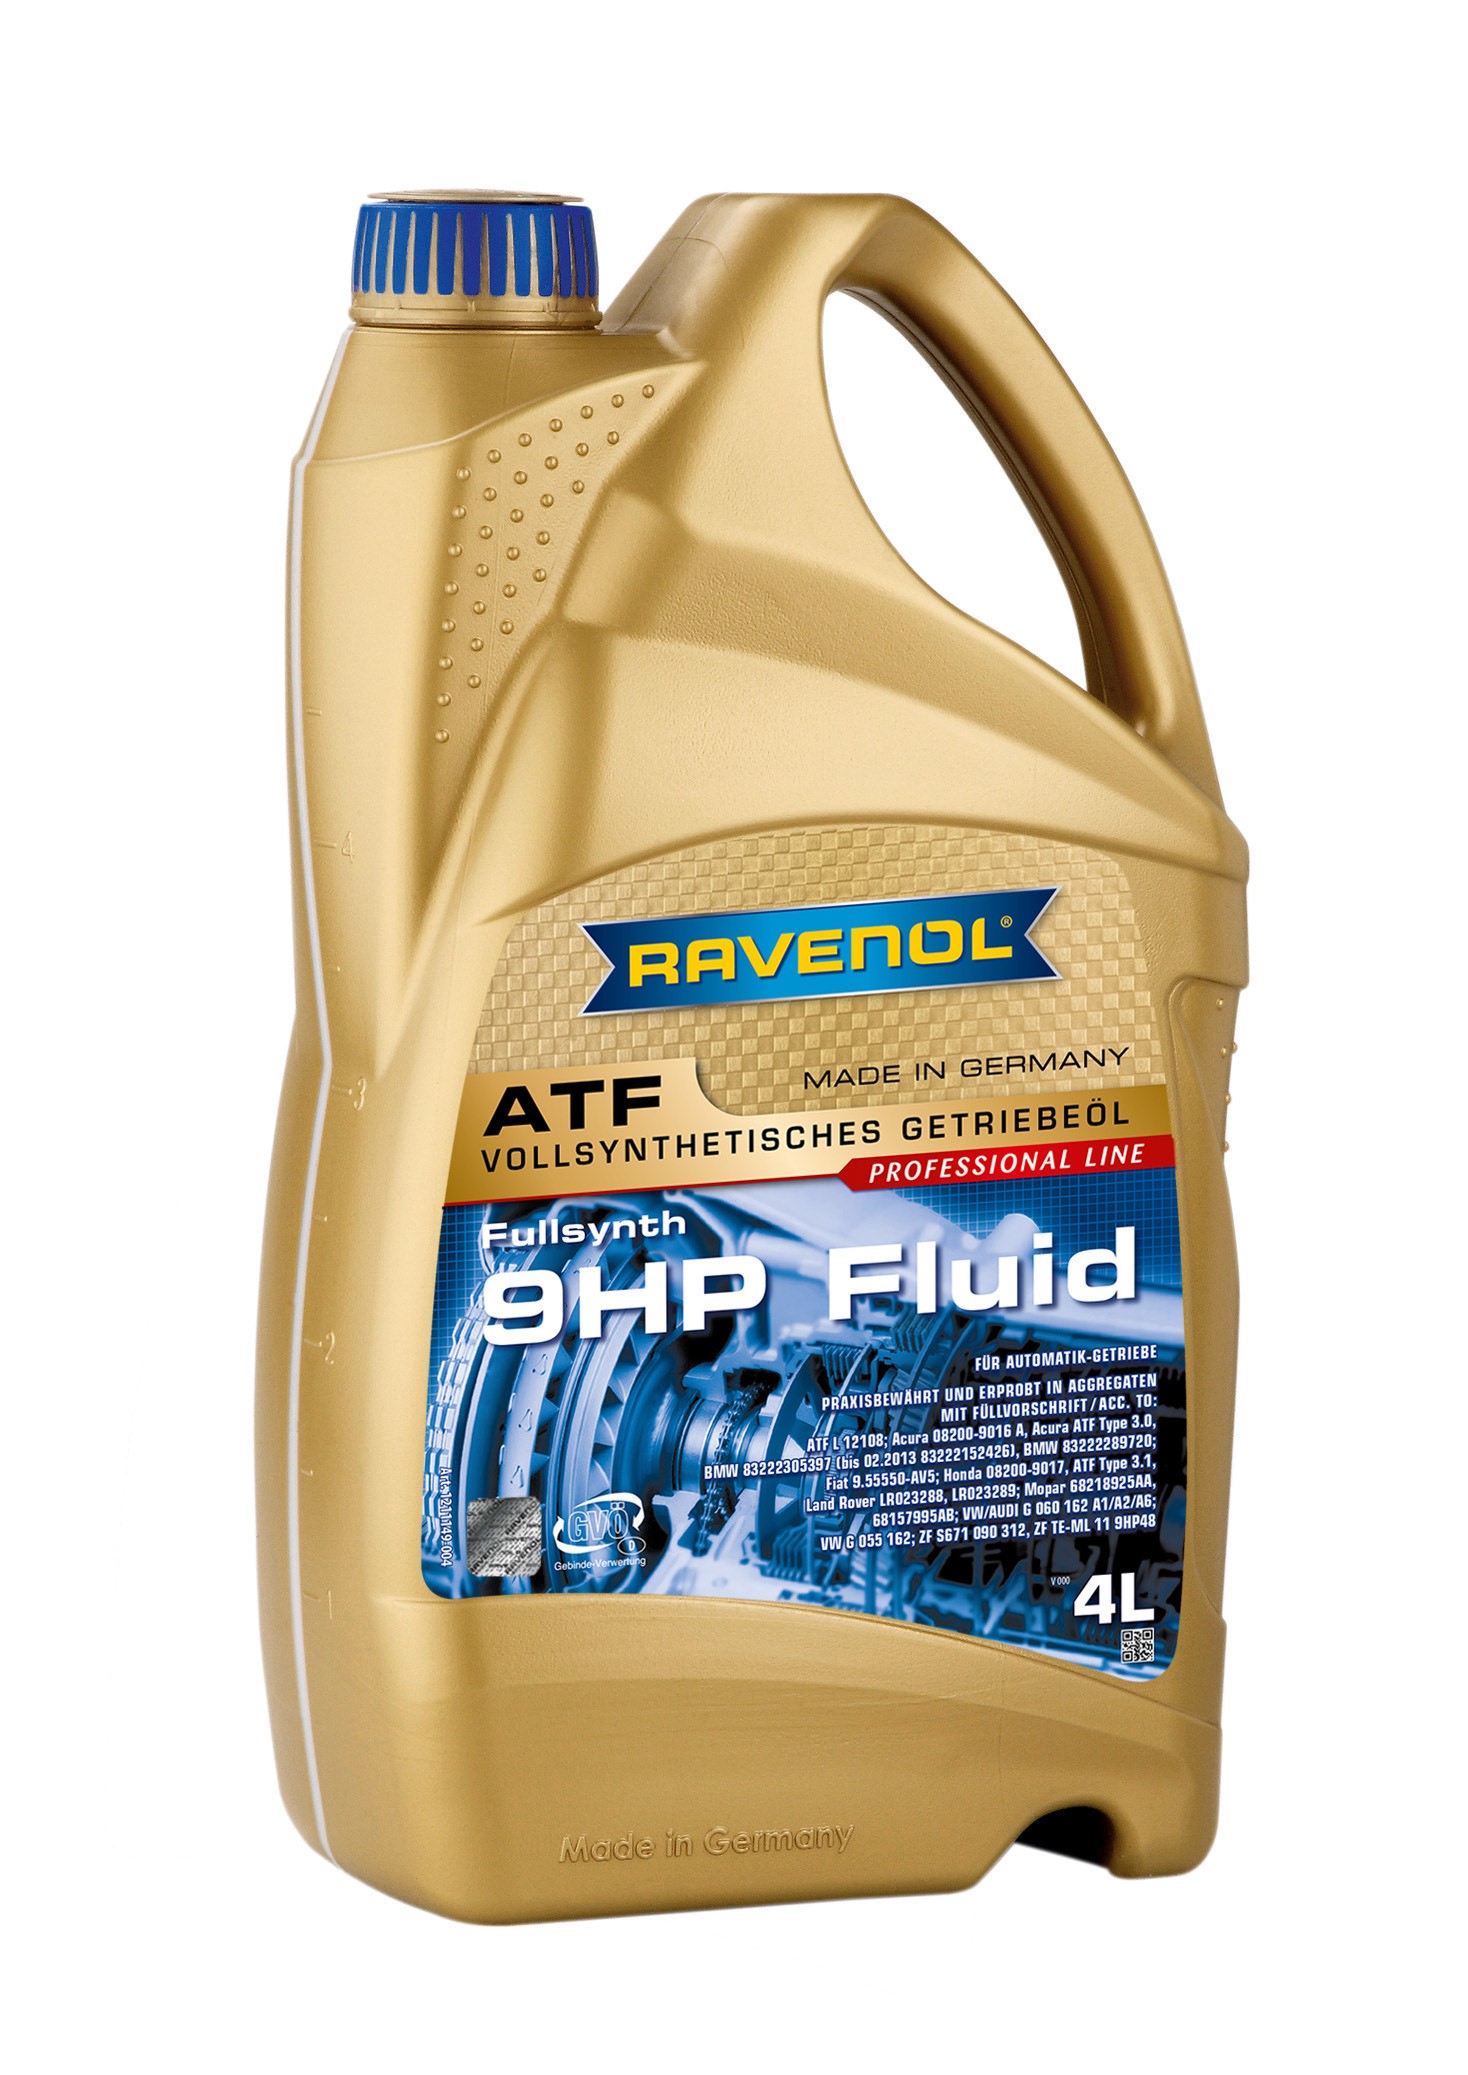 RAVENOL ATF 9HP Fluid